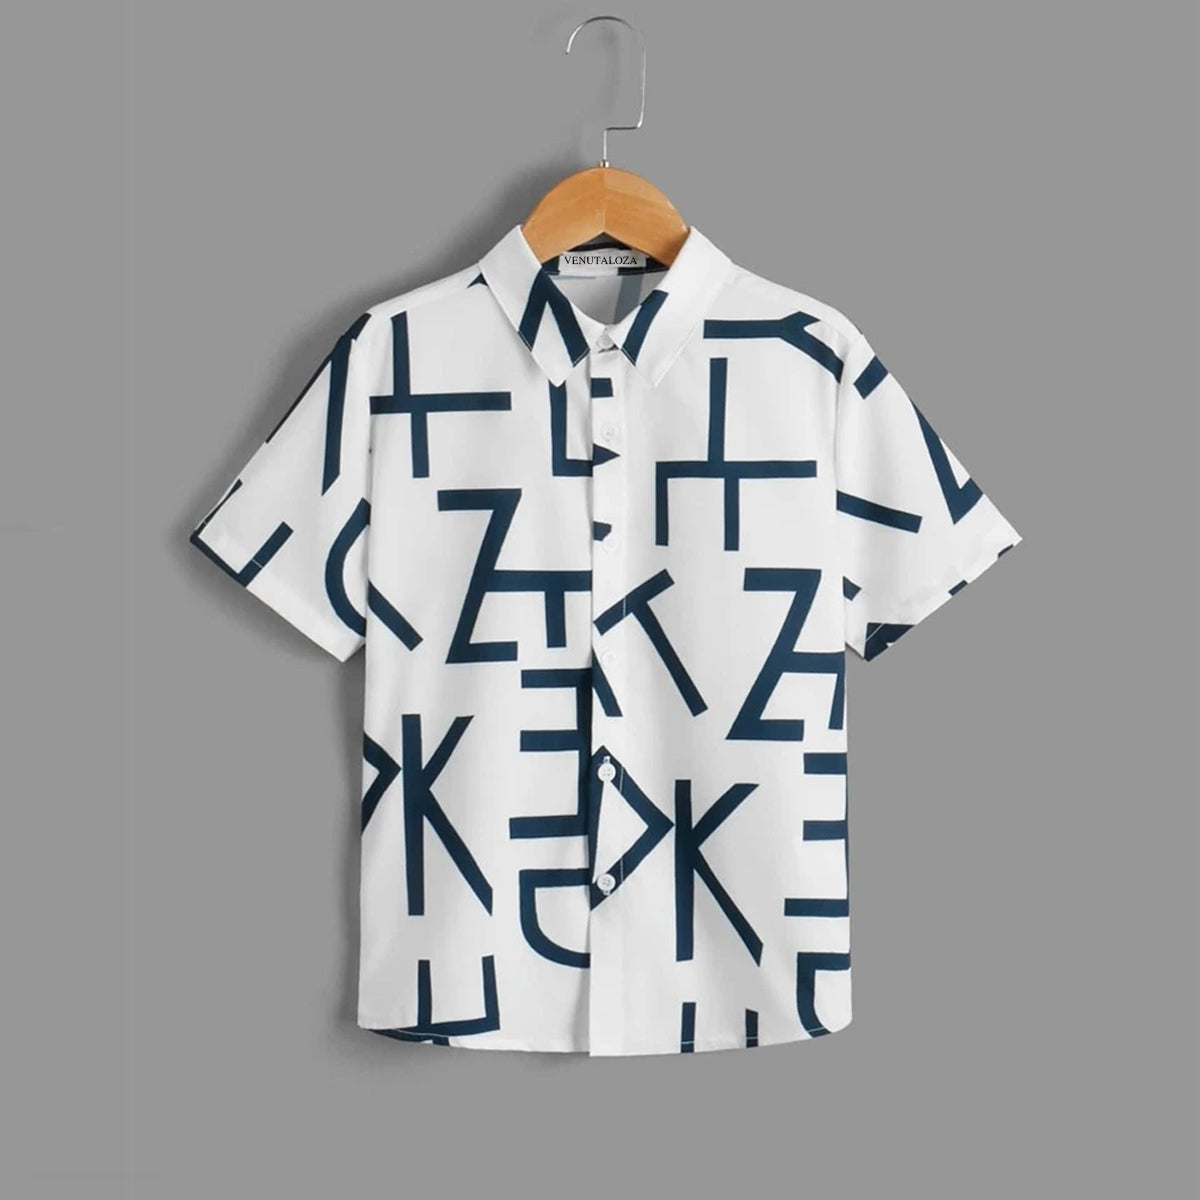 Venutaloza Letter & Graphic Mock Neck and Floral Designer Button Front (Combo Pack Of 3) Shirt For Boy.